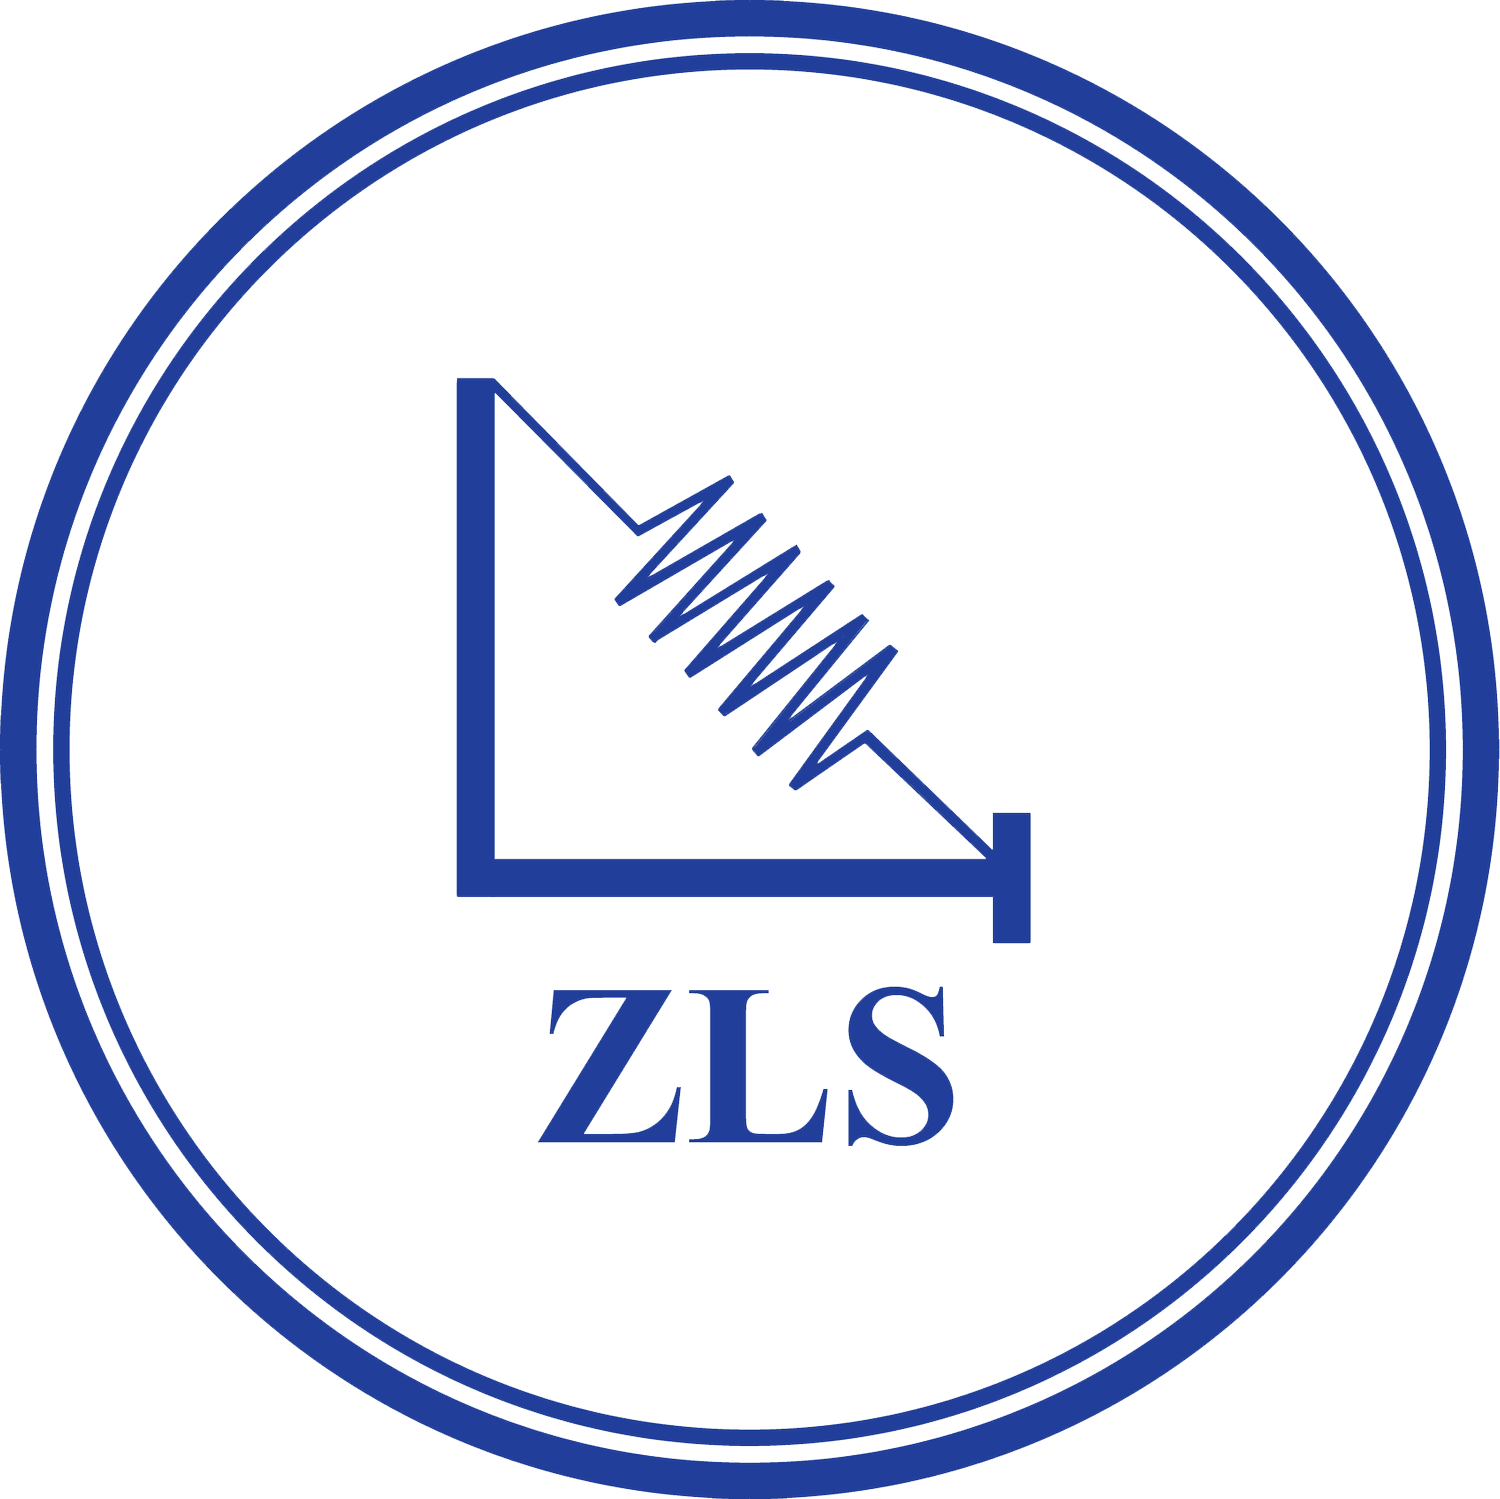 ZLS Corporation